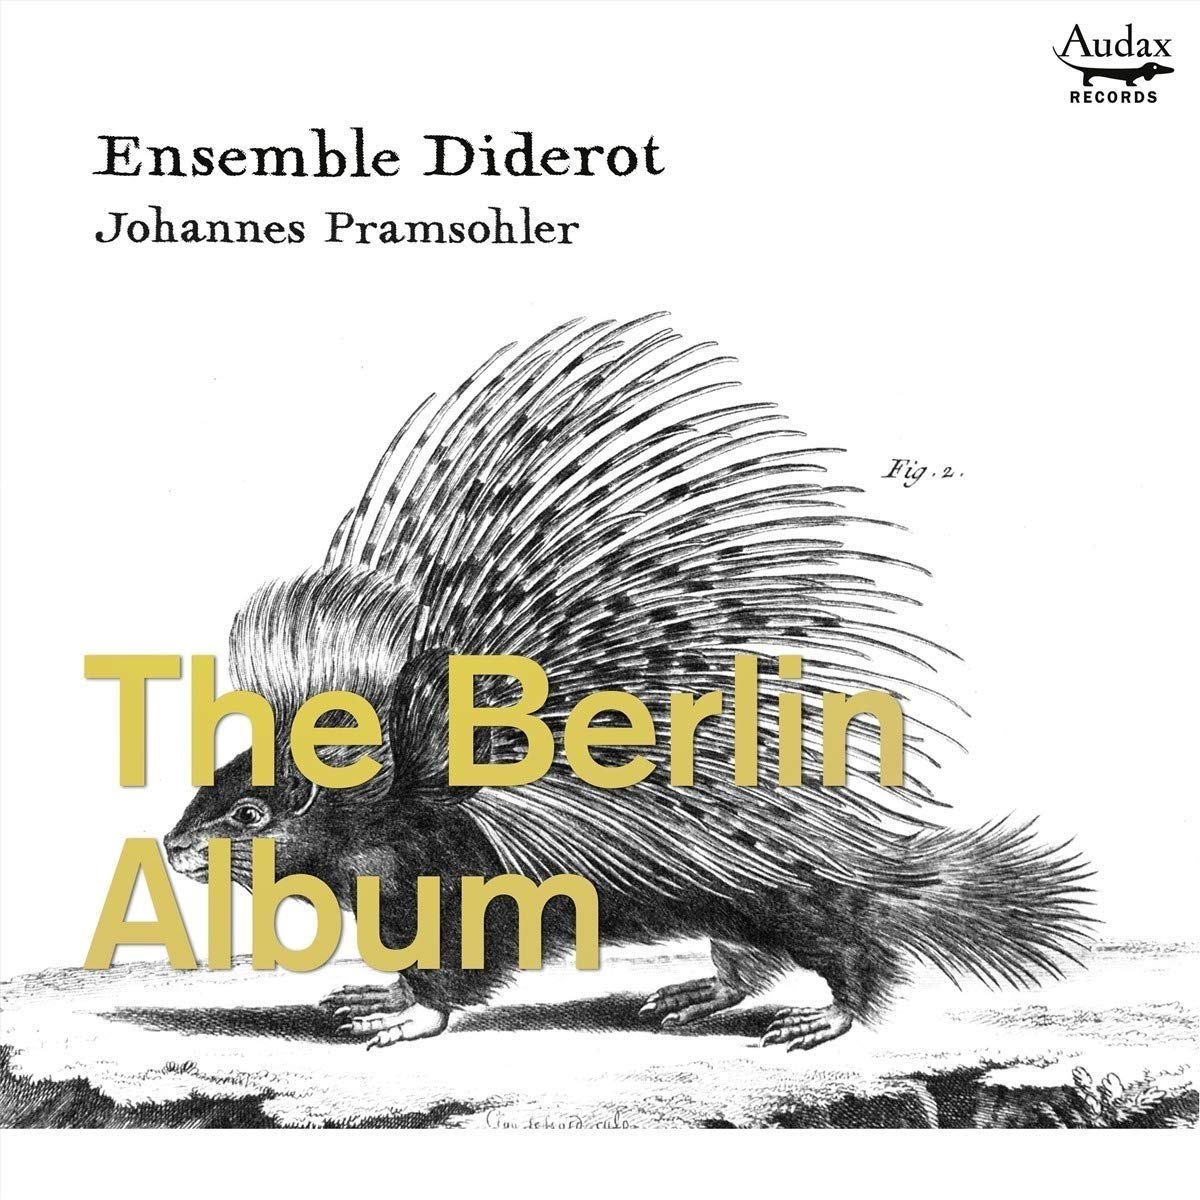 The Berlin Album / Ensemble Diderot